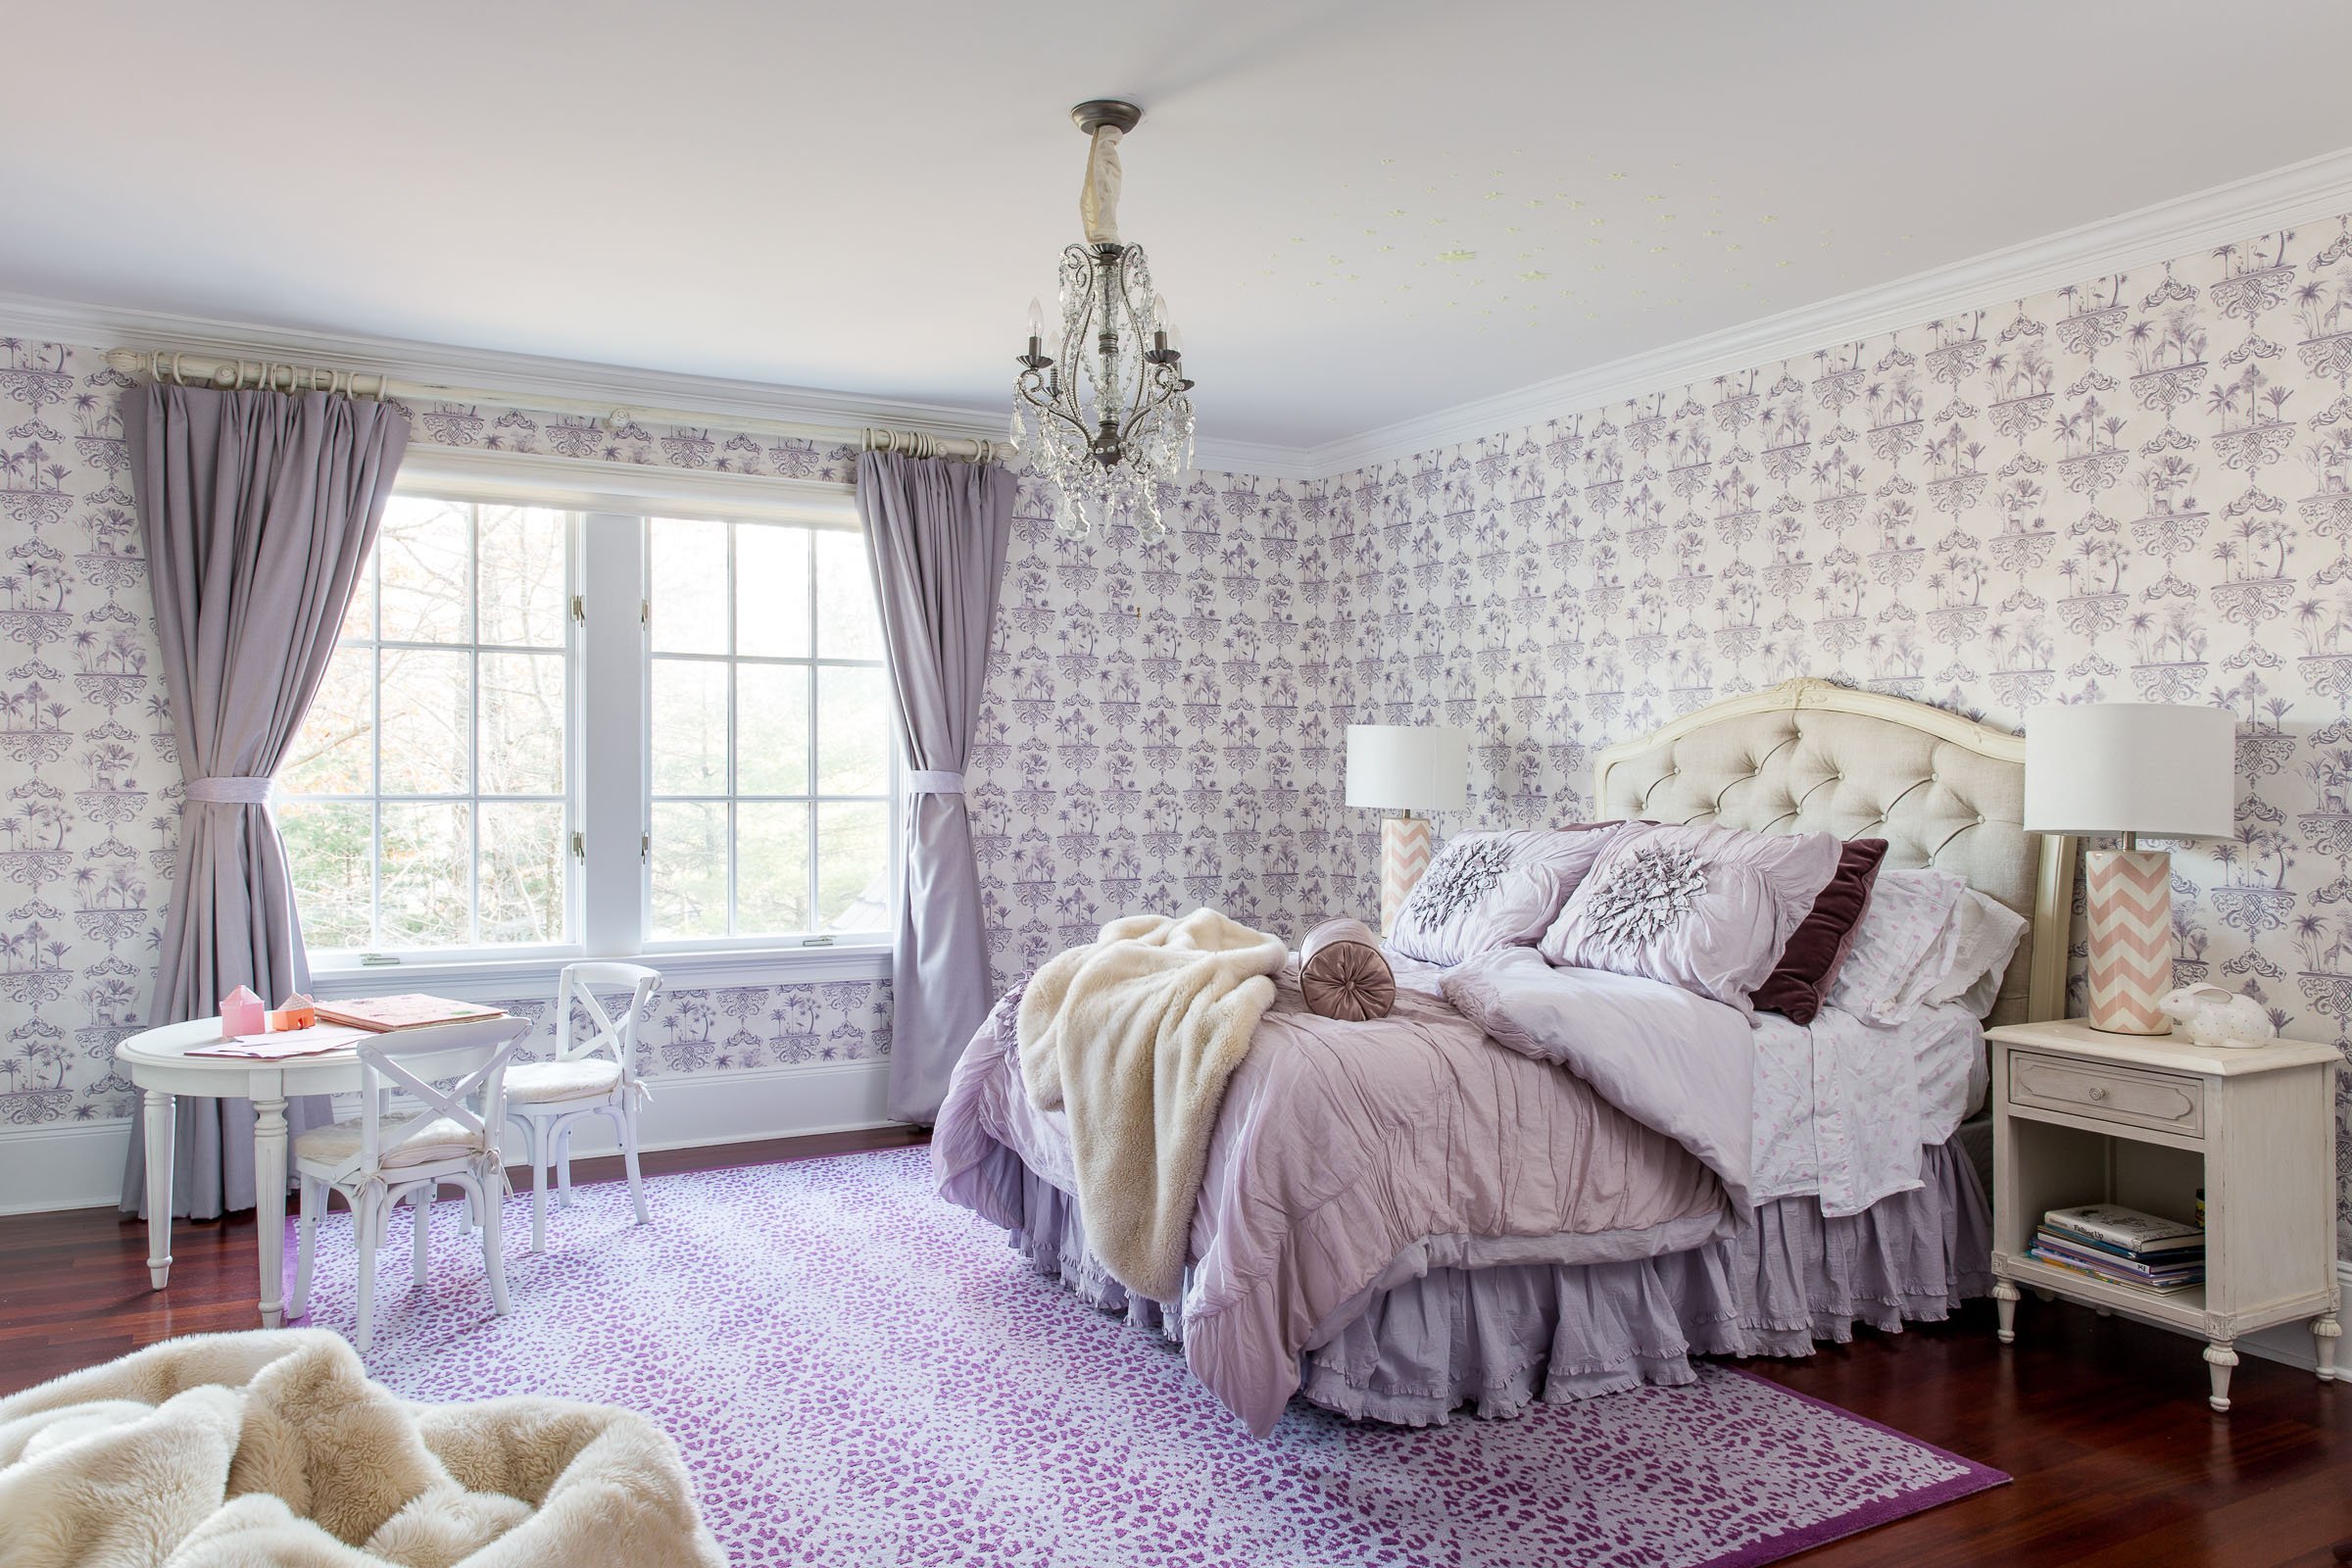 lovely and lavendar room design by KNOF design